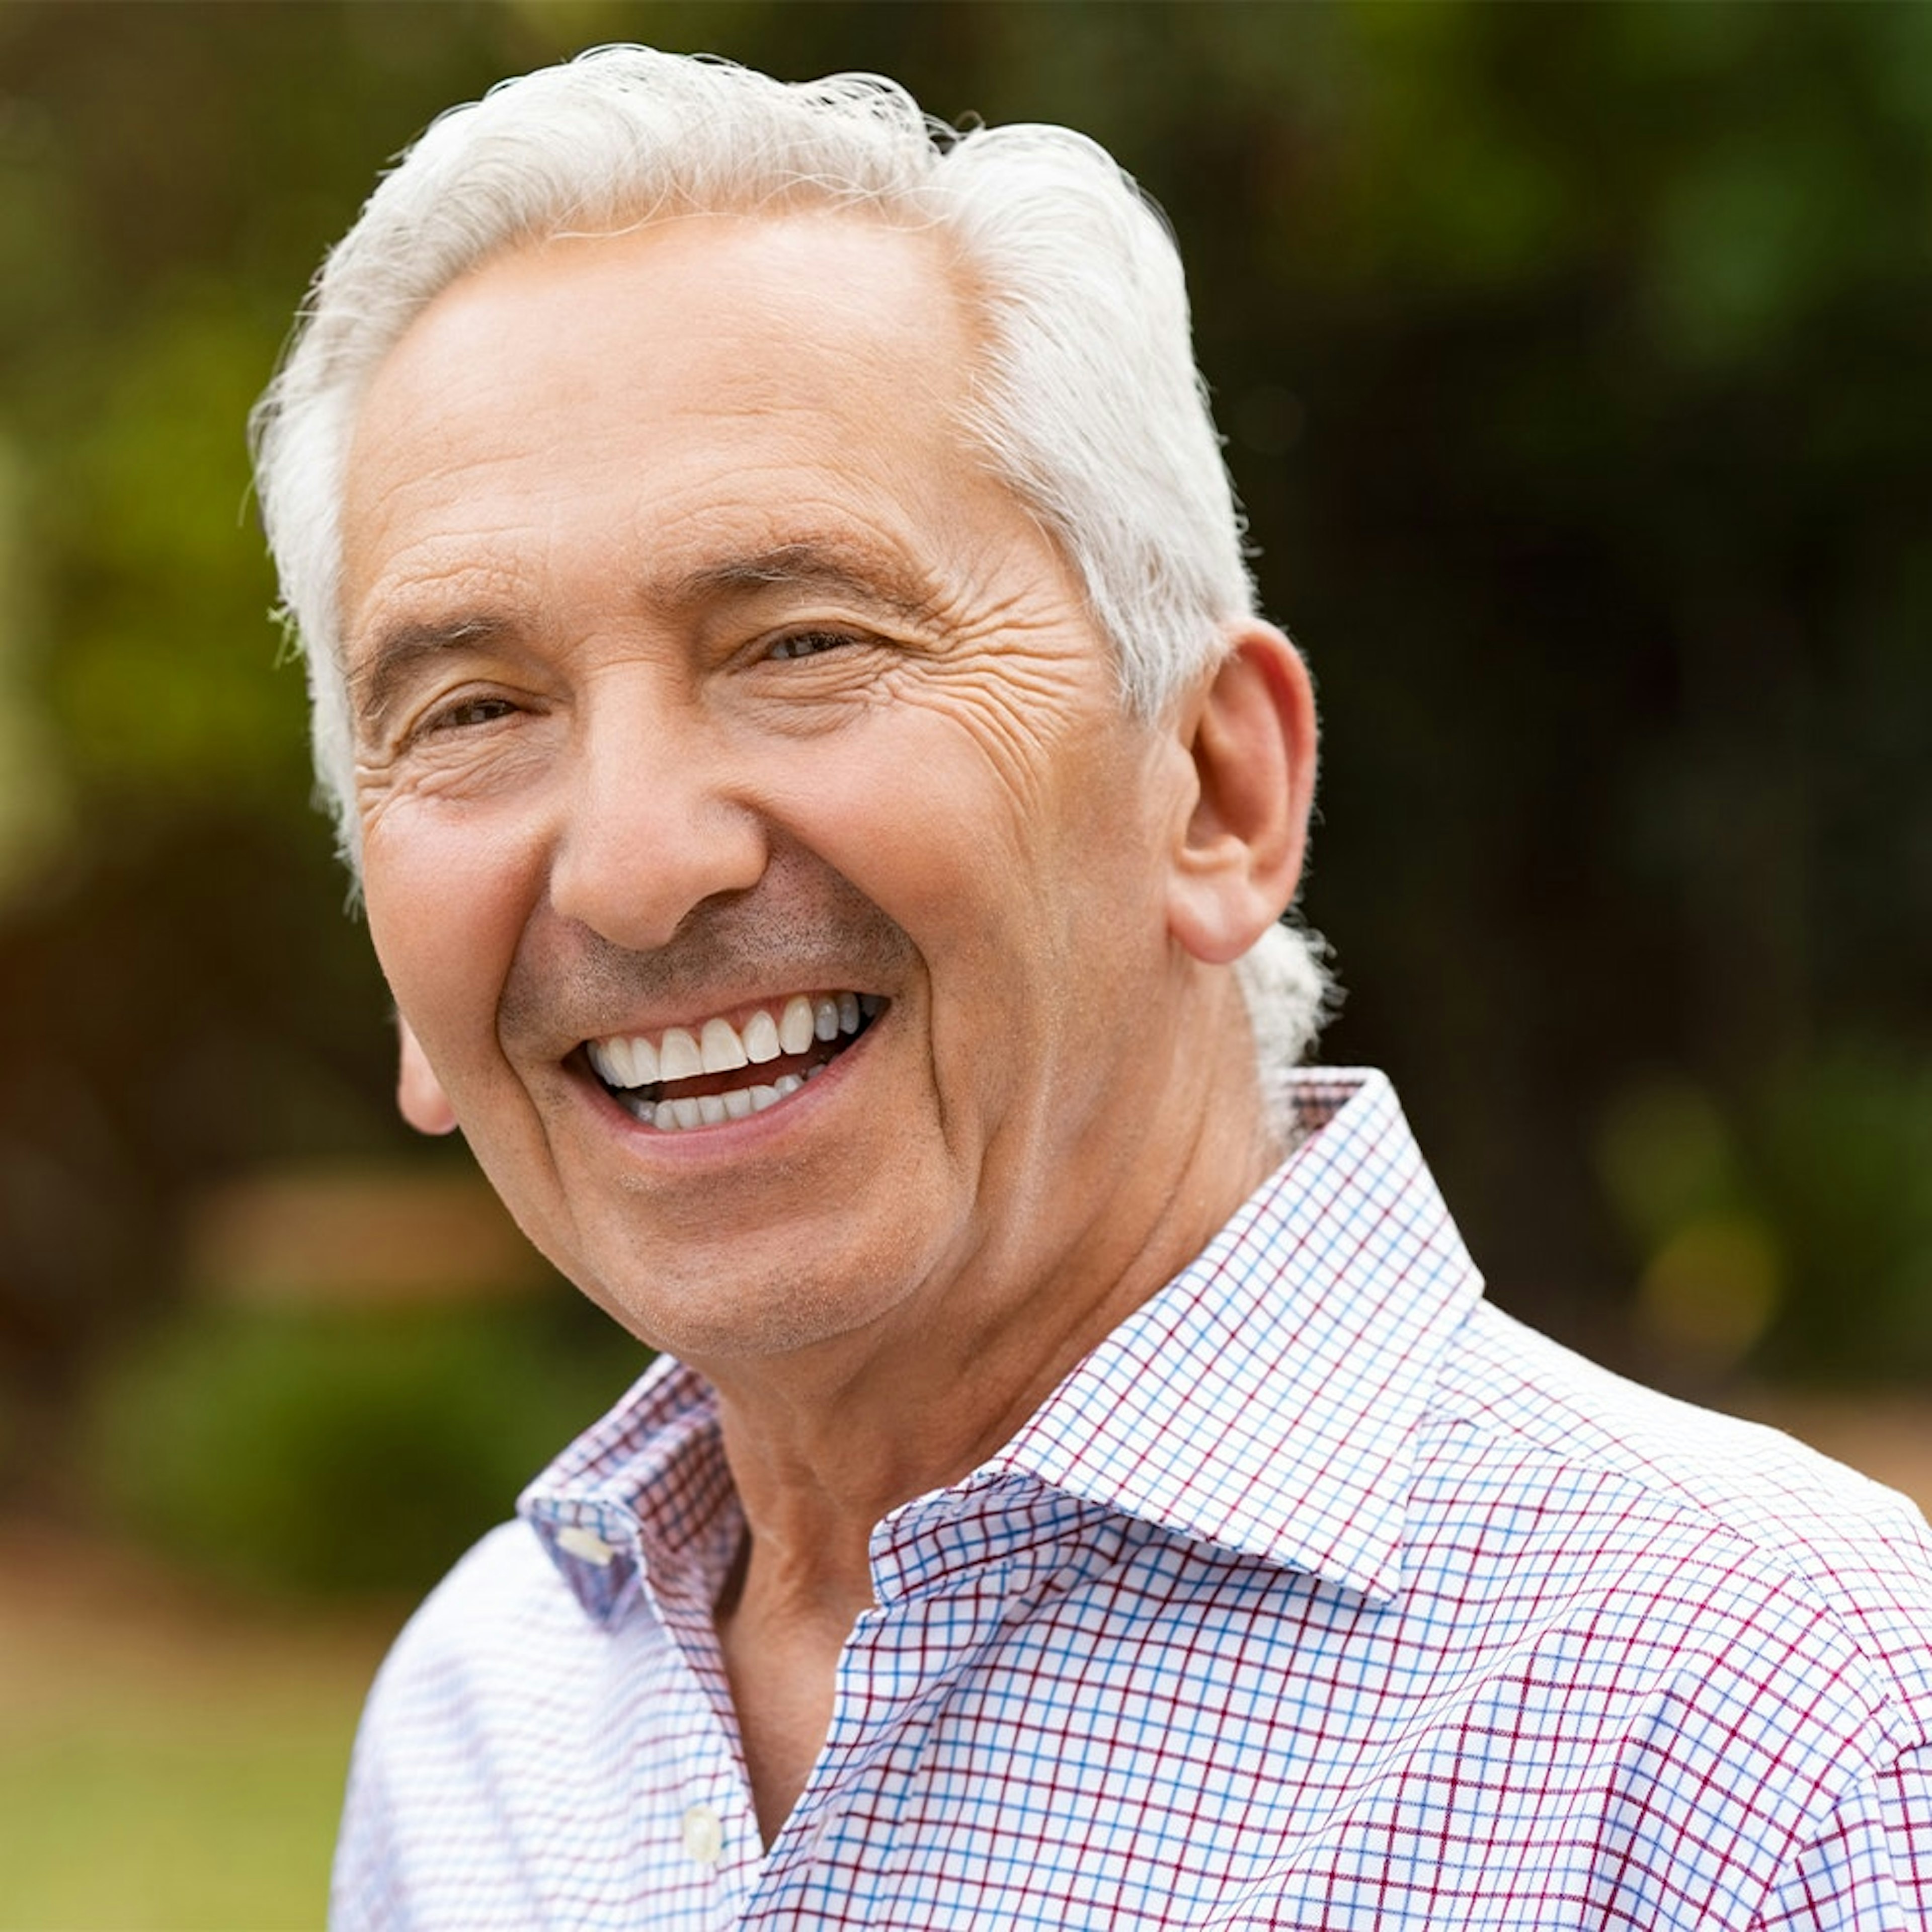 Mature man smiling after receiving dental bridge